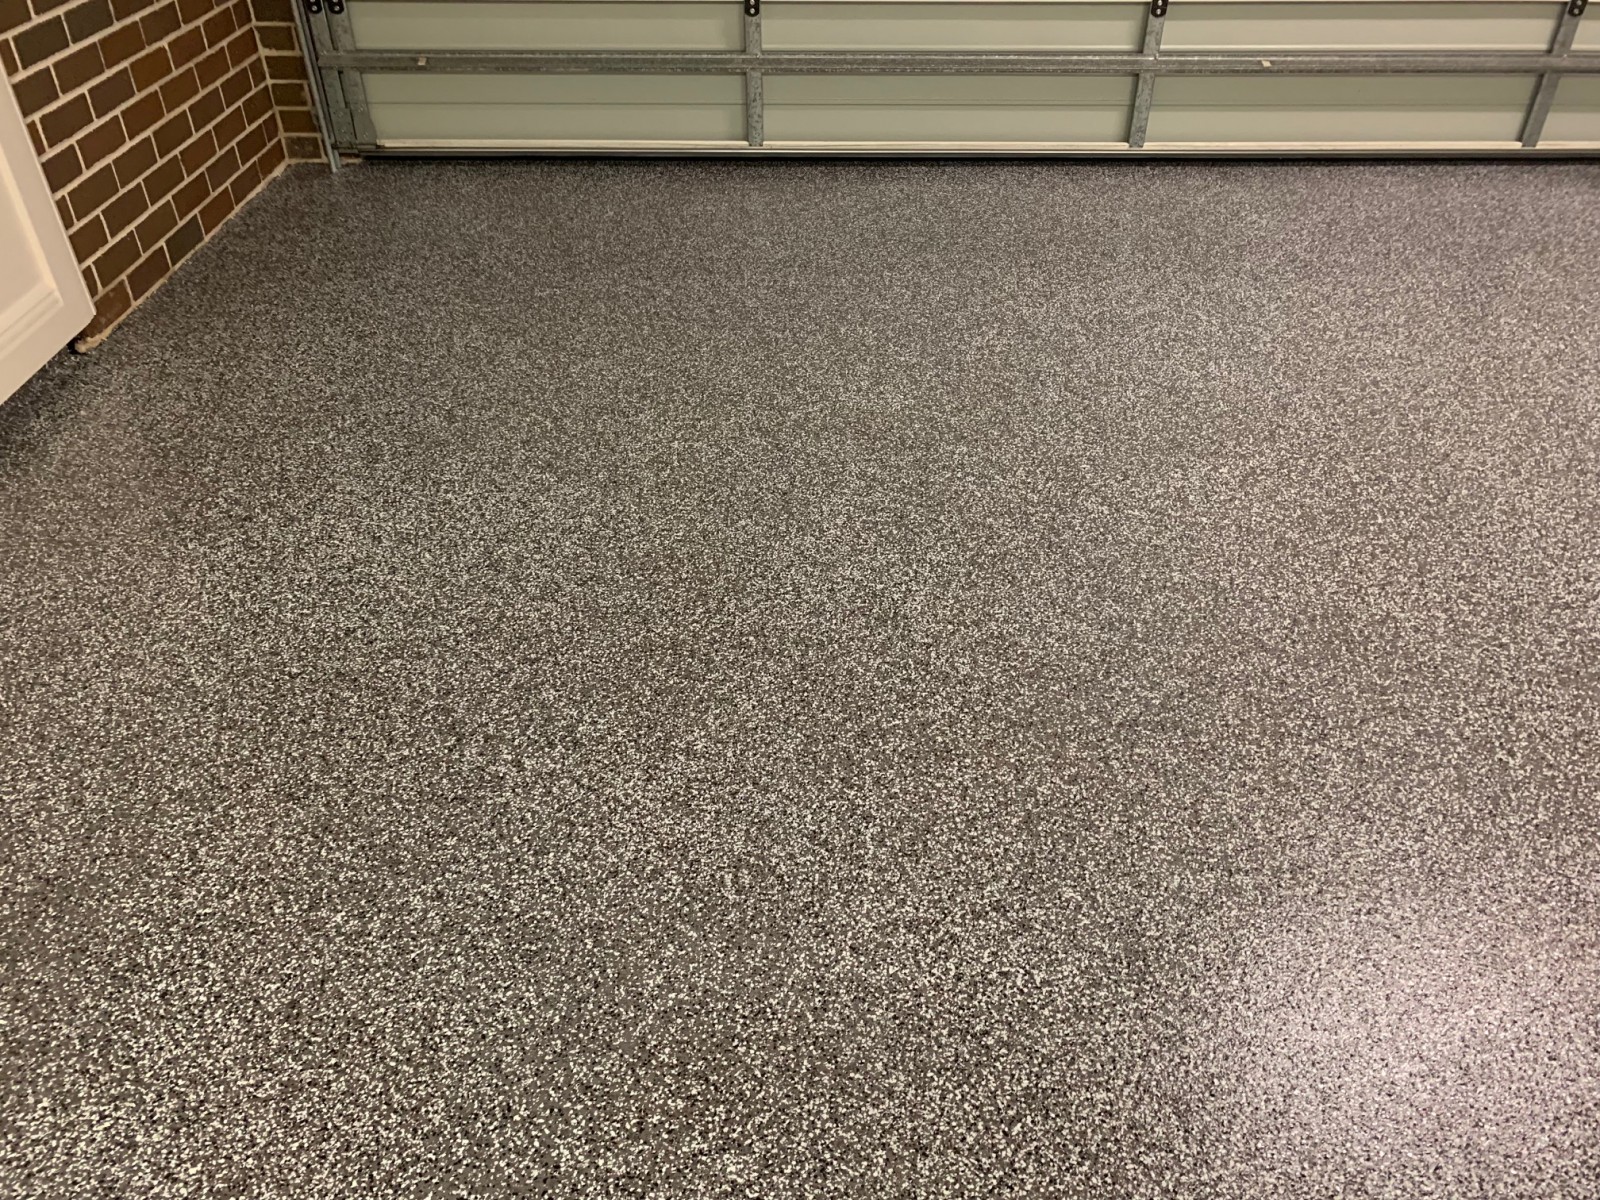 Apoxy garage floor 